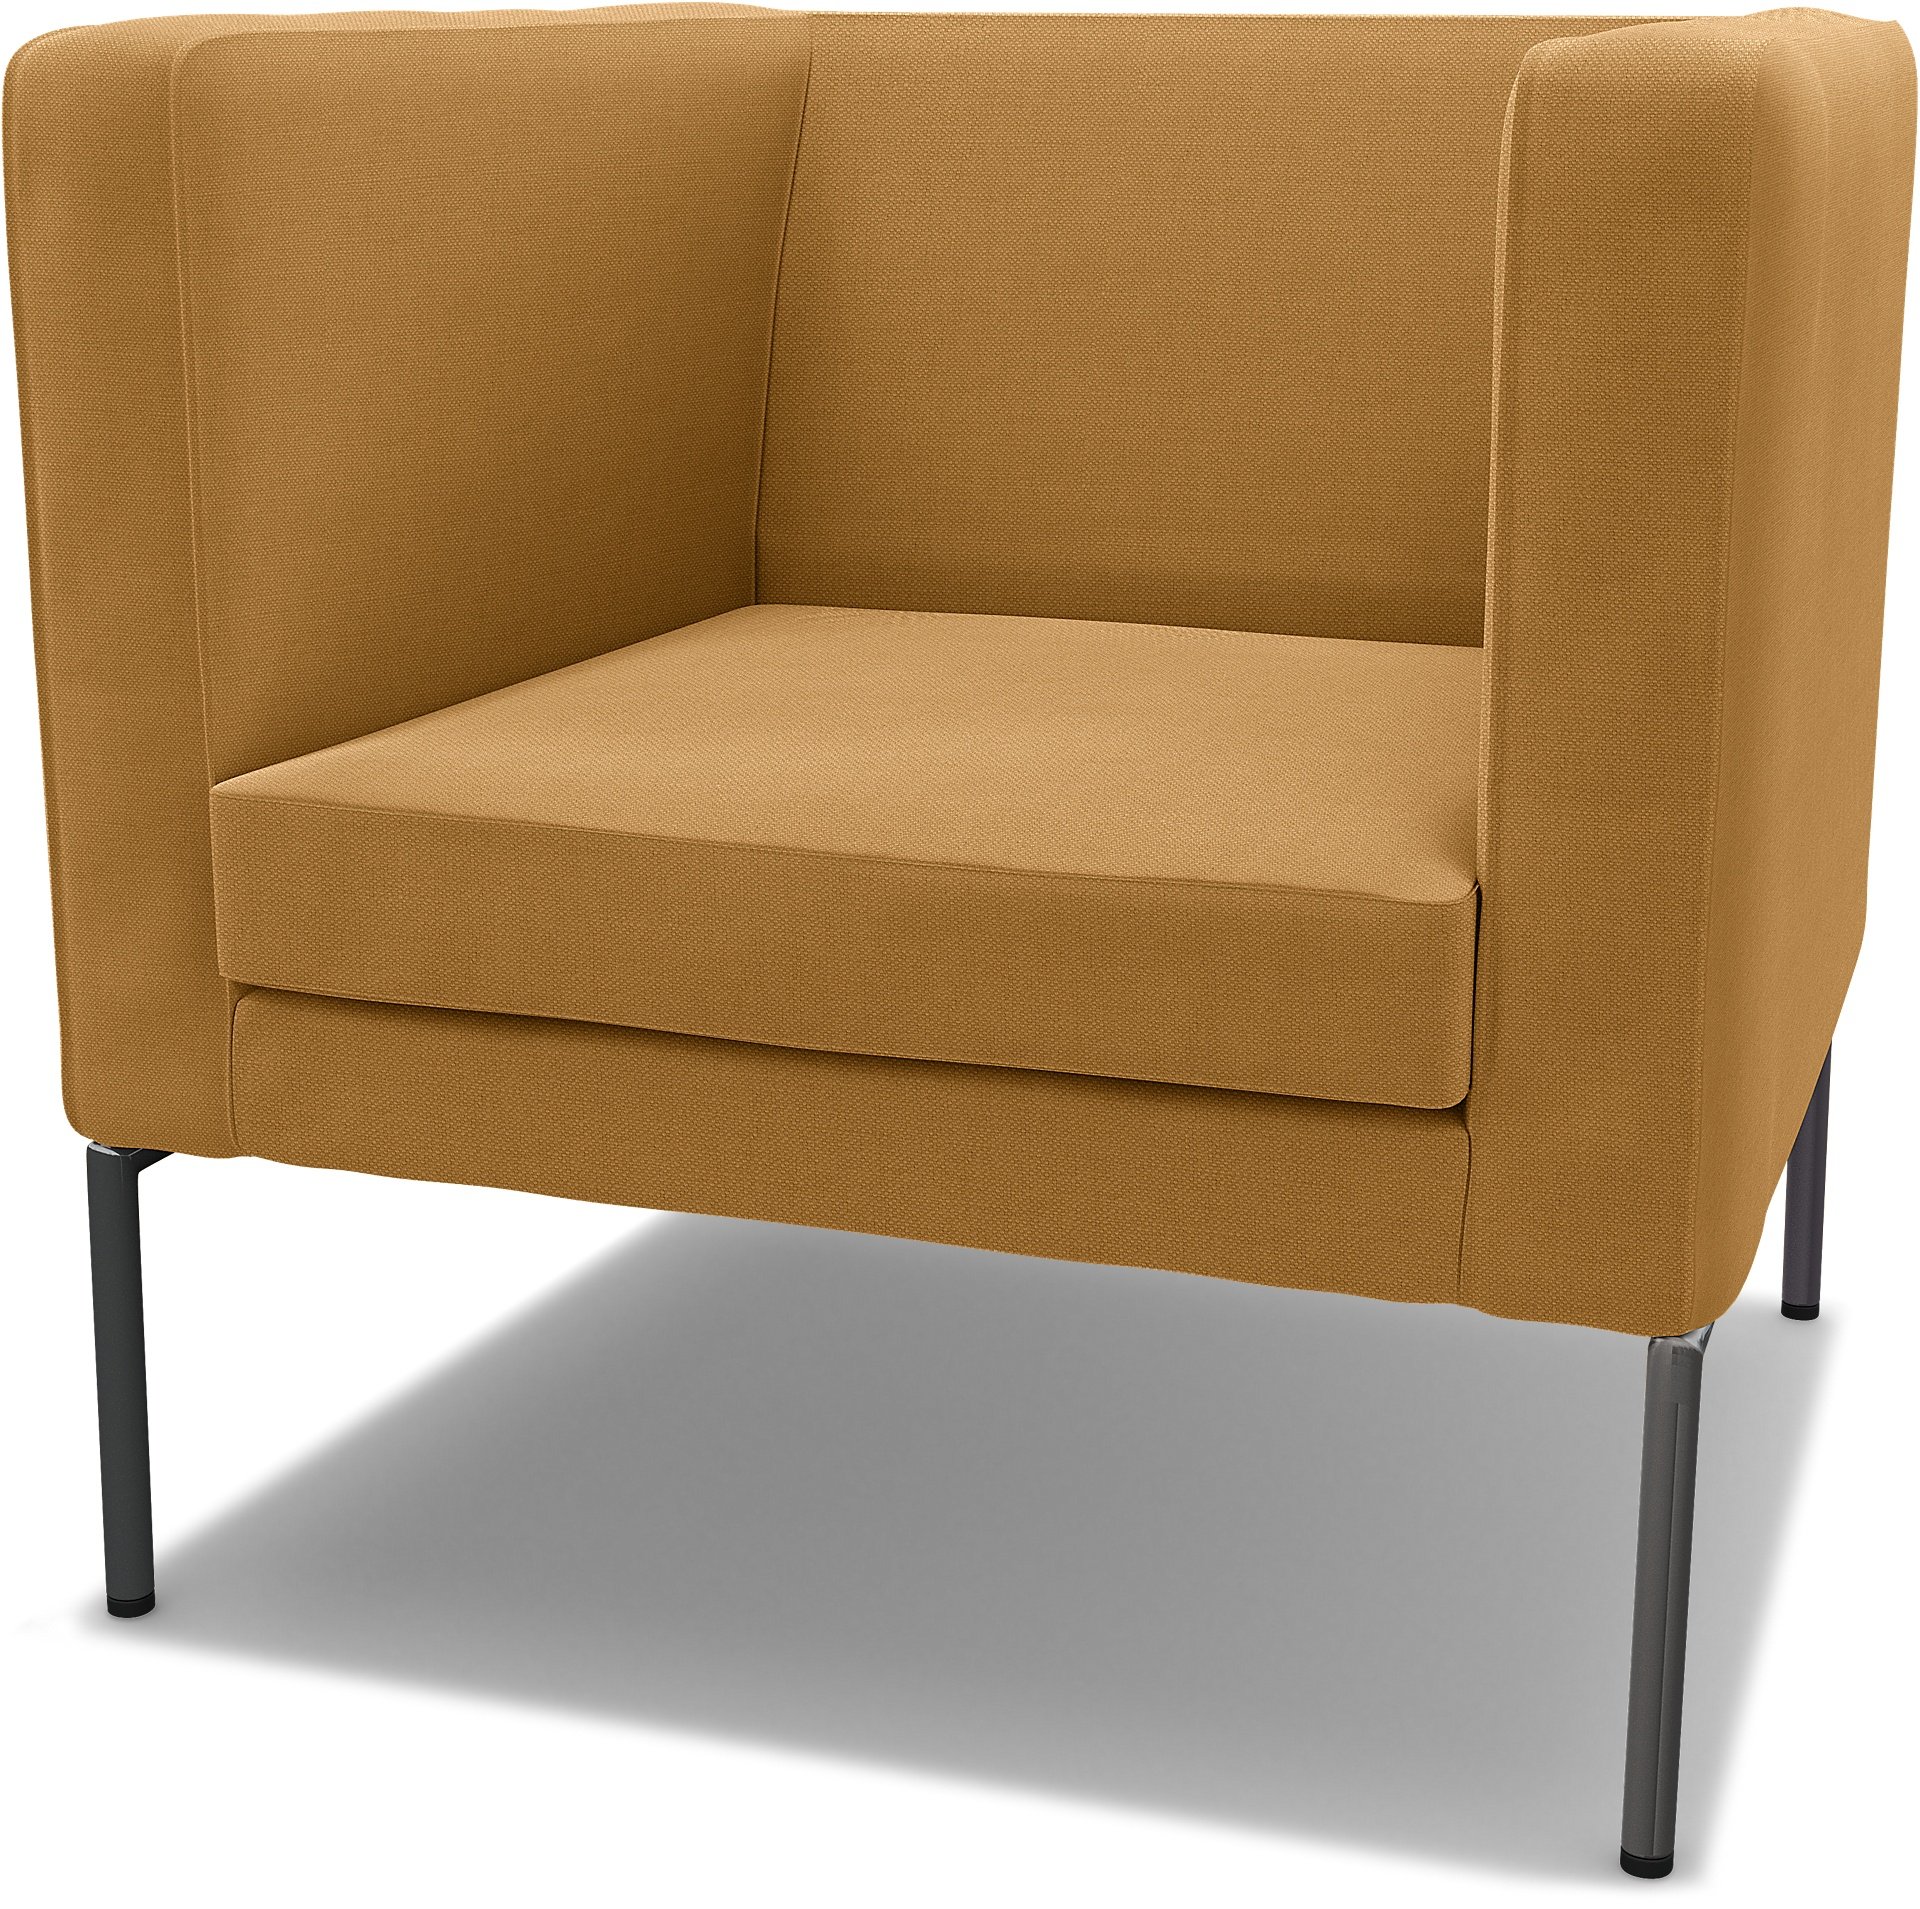 IKEA - Klappsta Armchair Cover, Mustard, Linen - Bemz